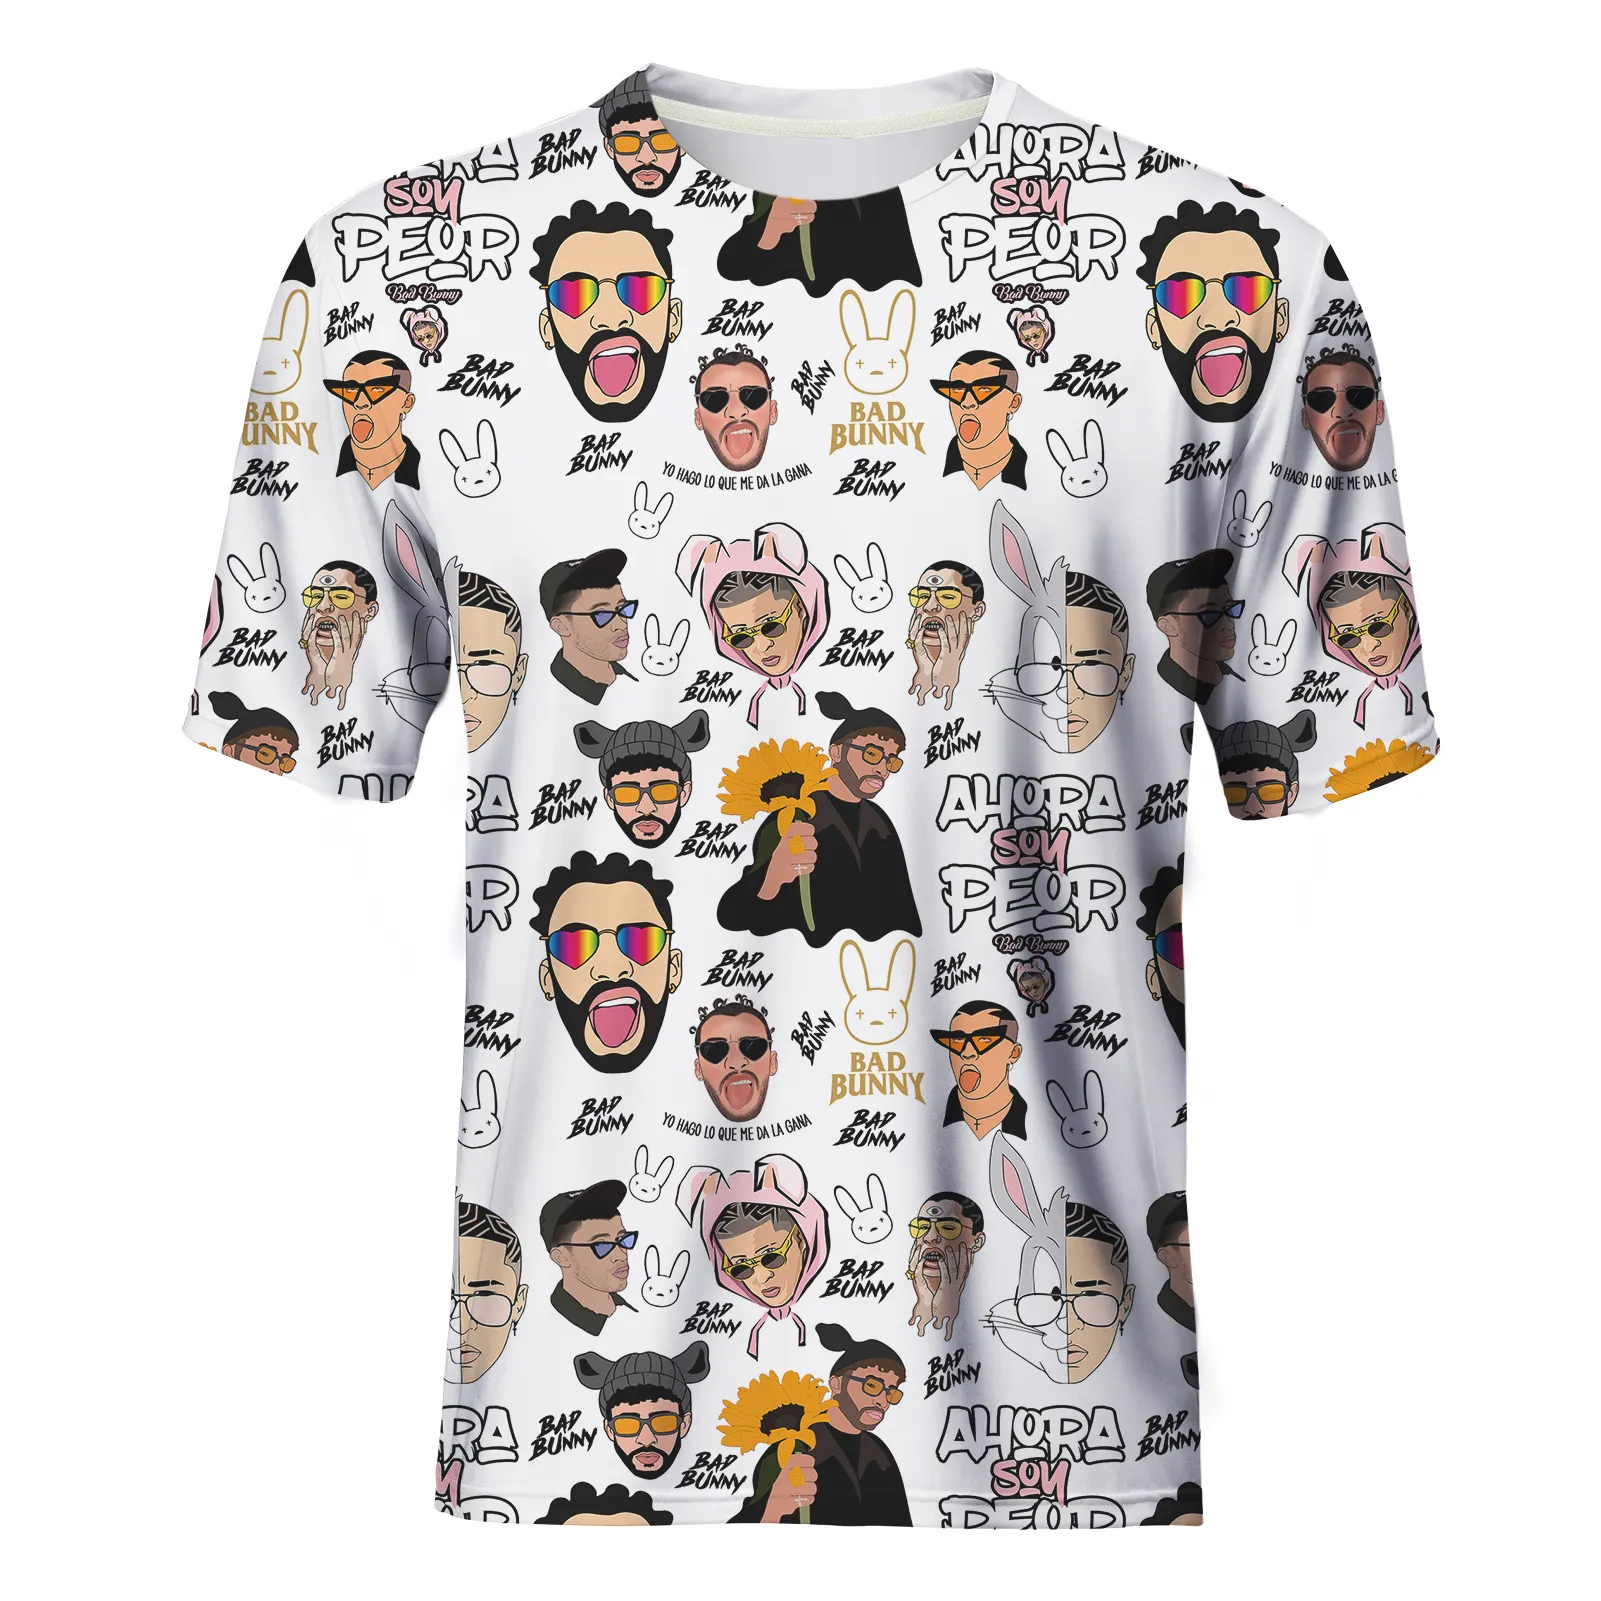 Newest Custom Bad Bunny New Album Printed T Shirts For Boys Premium Polyester T Shirts In Bulk Men Oversized T Shirt